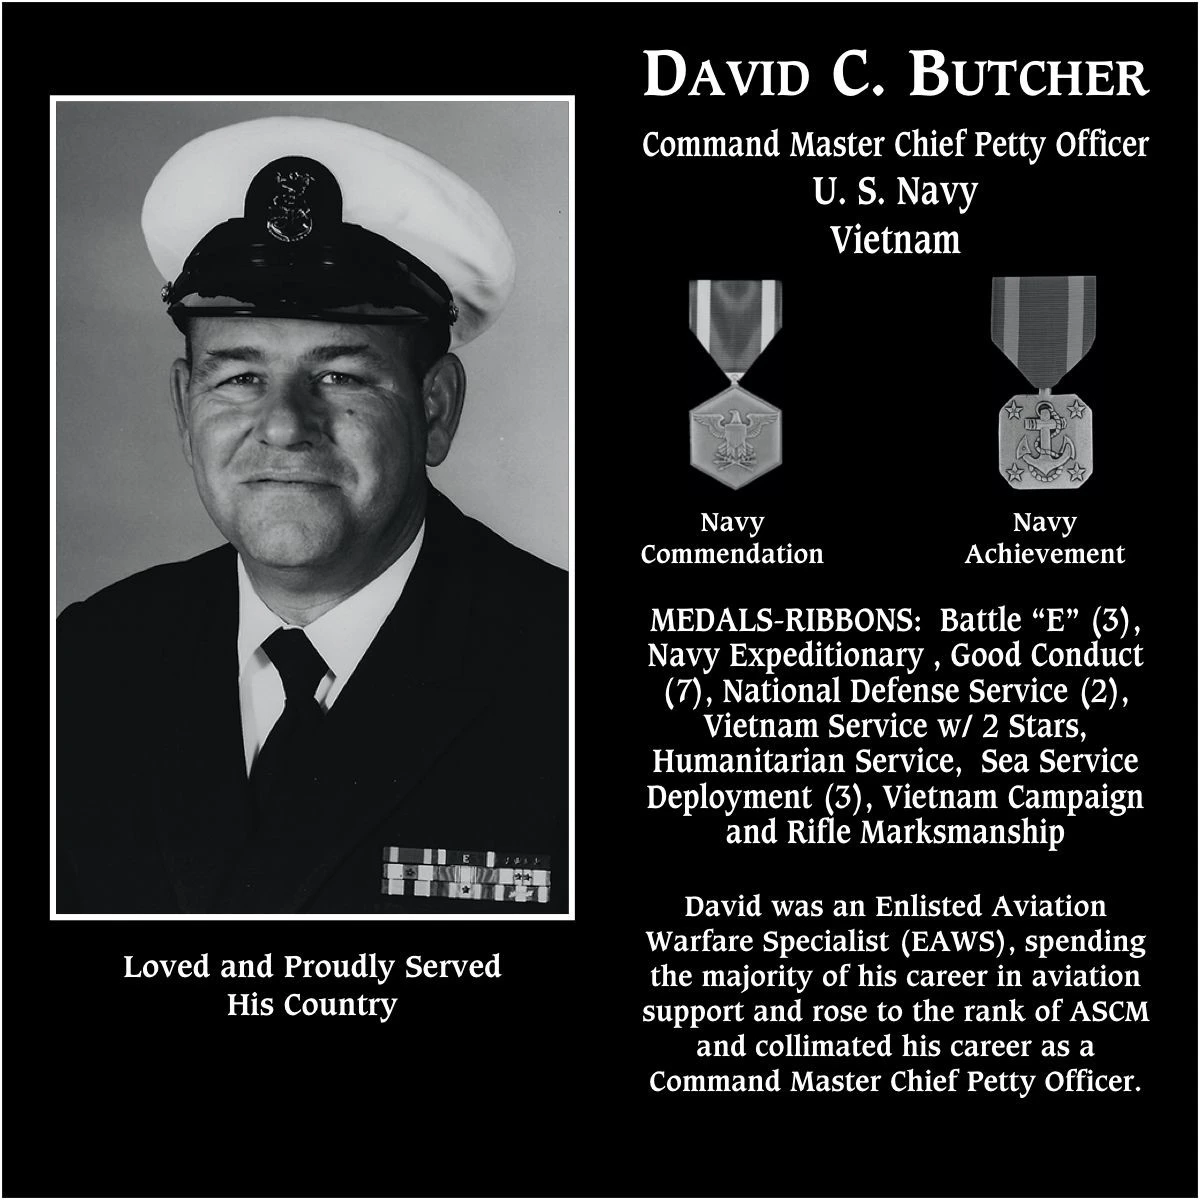 David C. Butcher